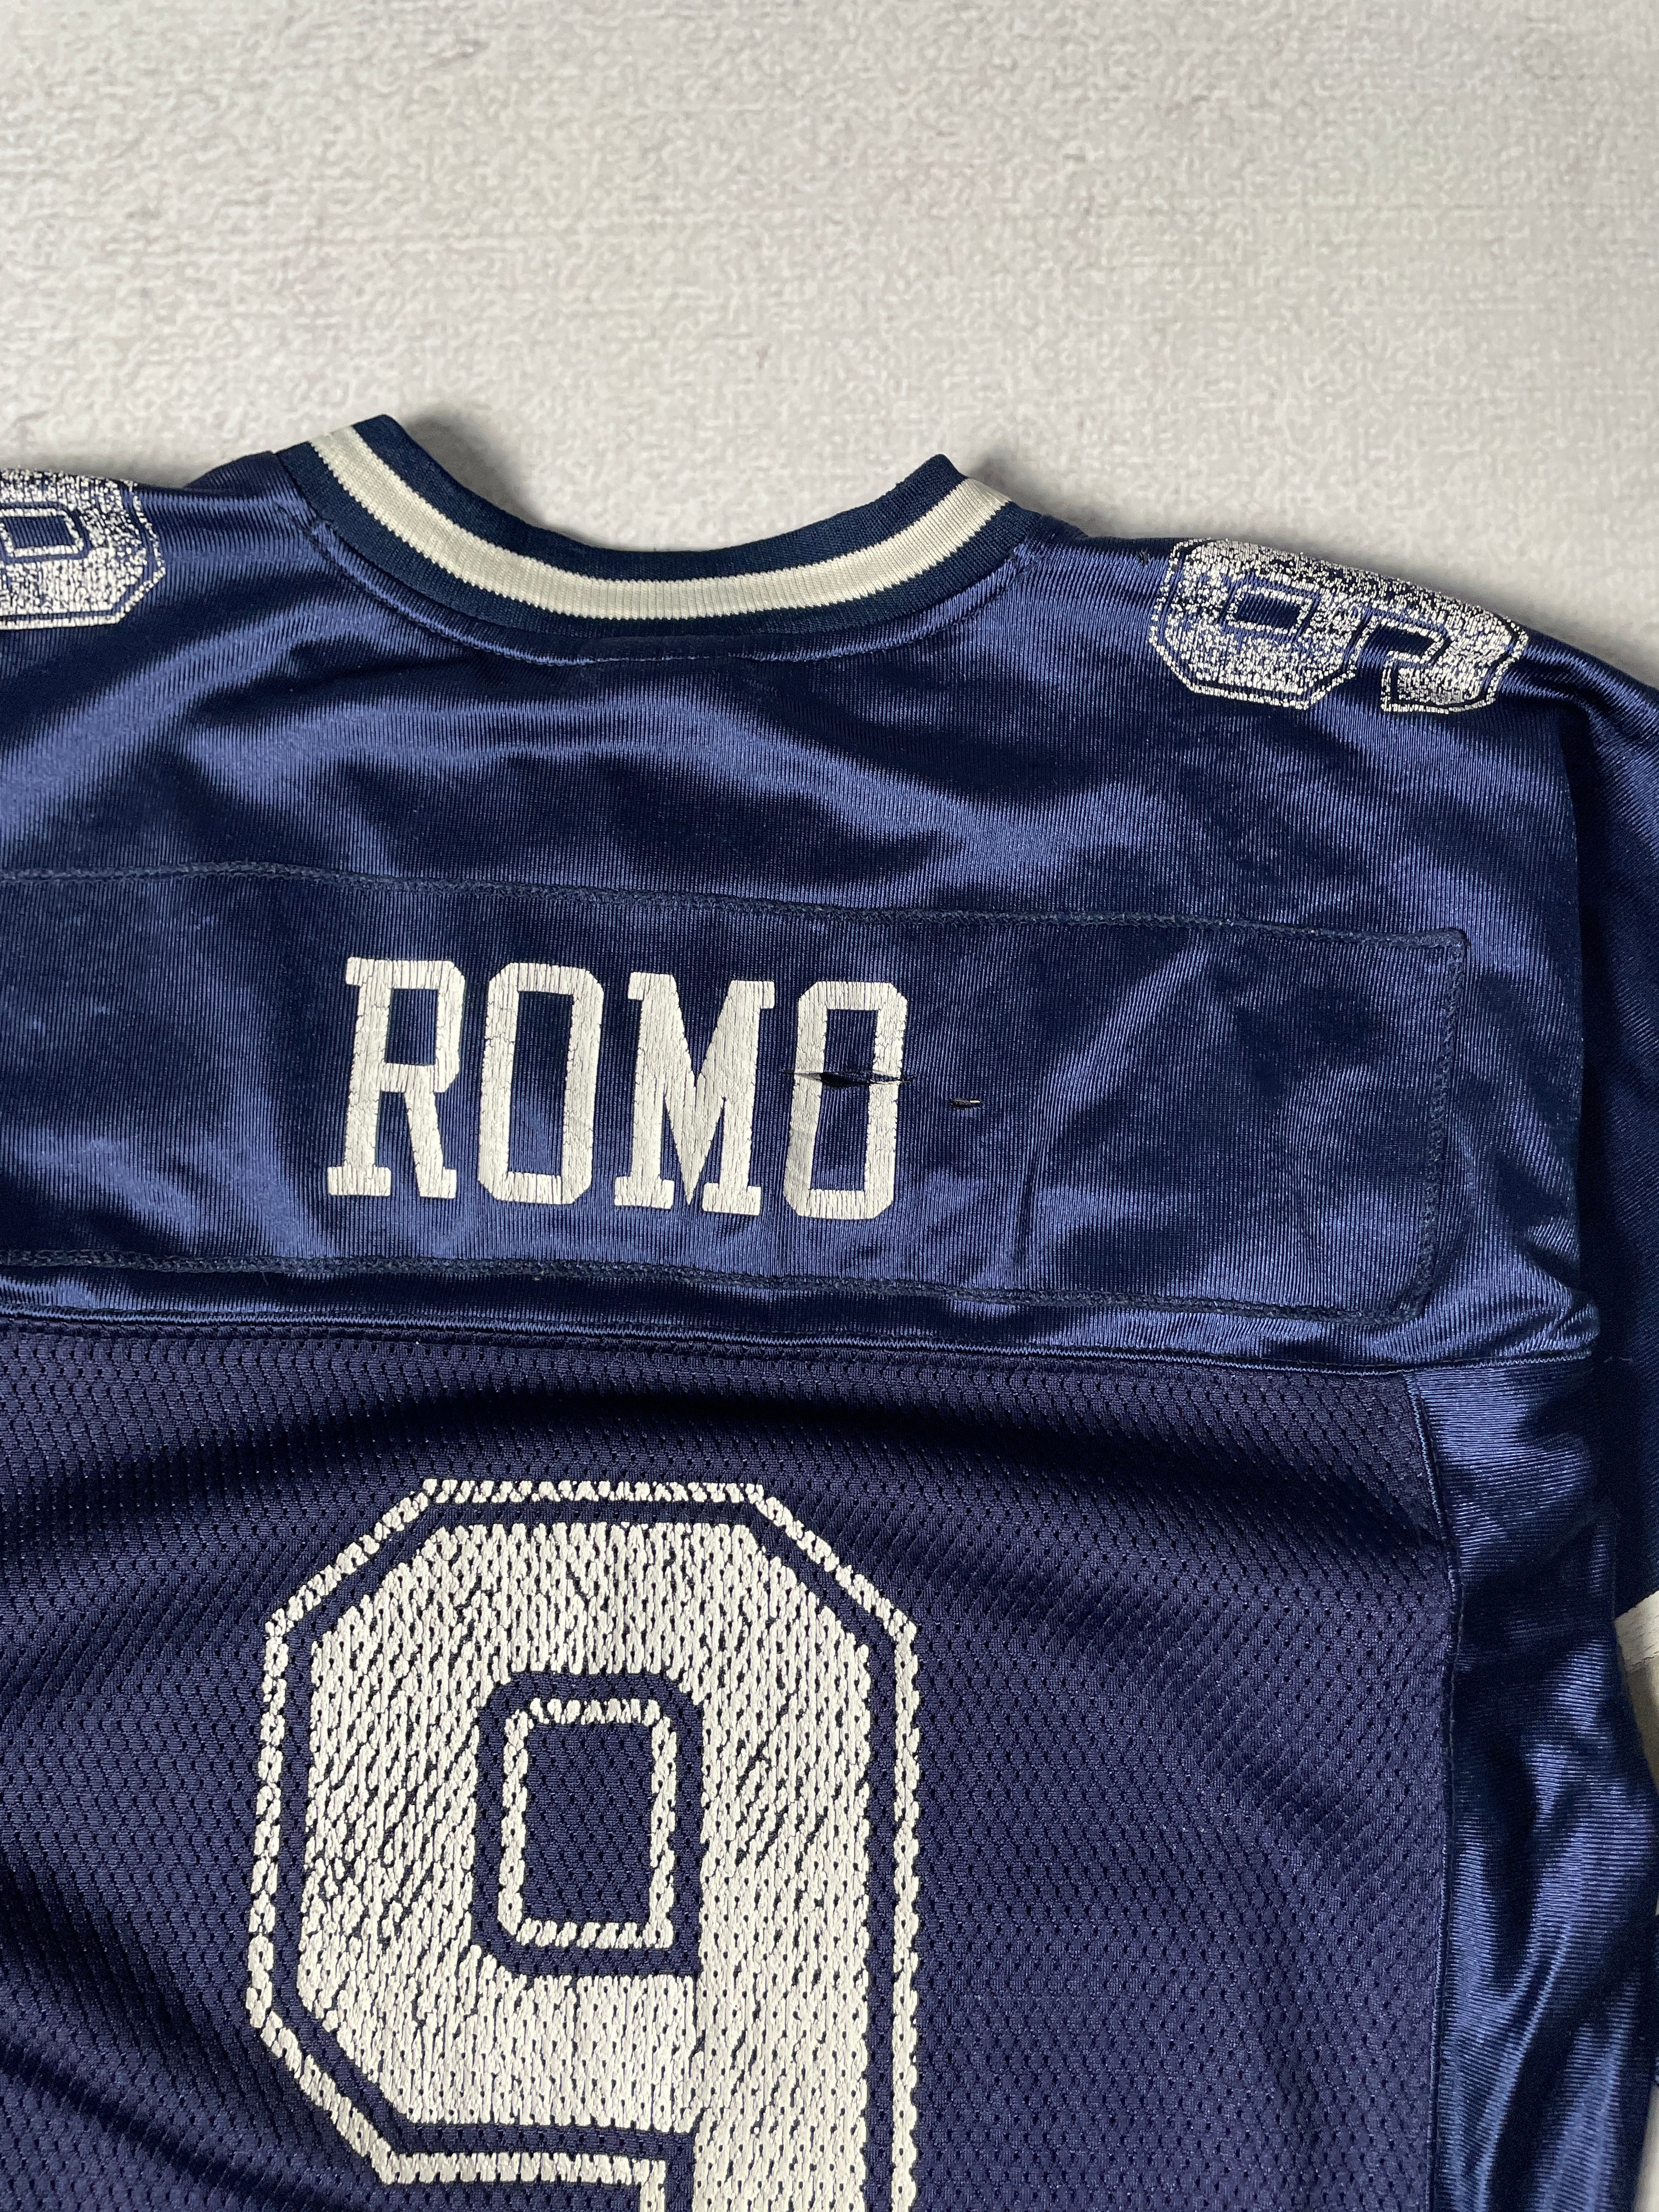 Vintage NFL Dallas Cowboys Tony Romo #9 Jersey - Men's Small